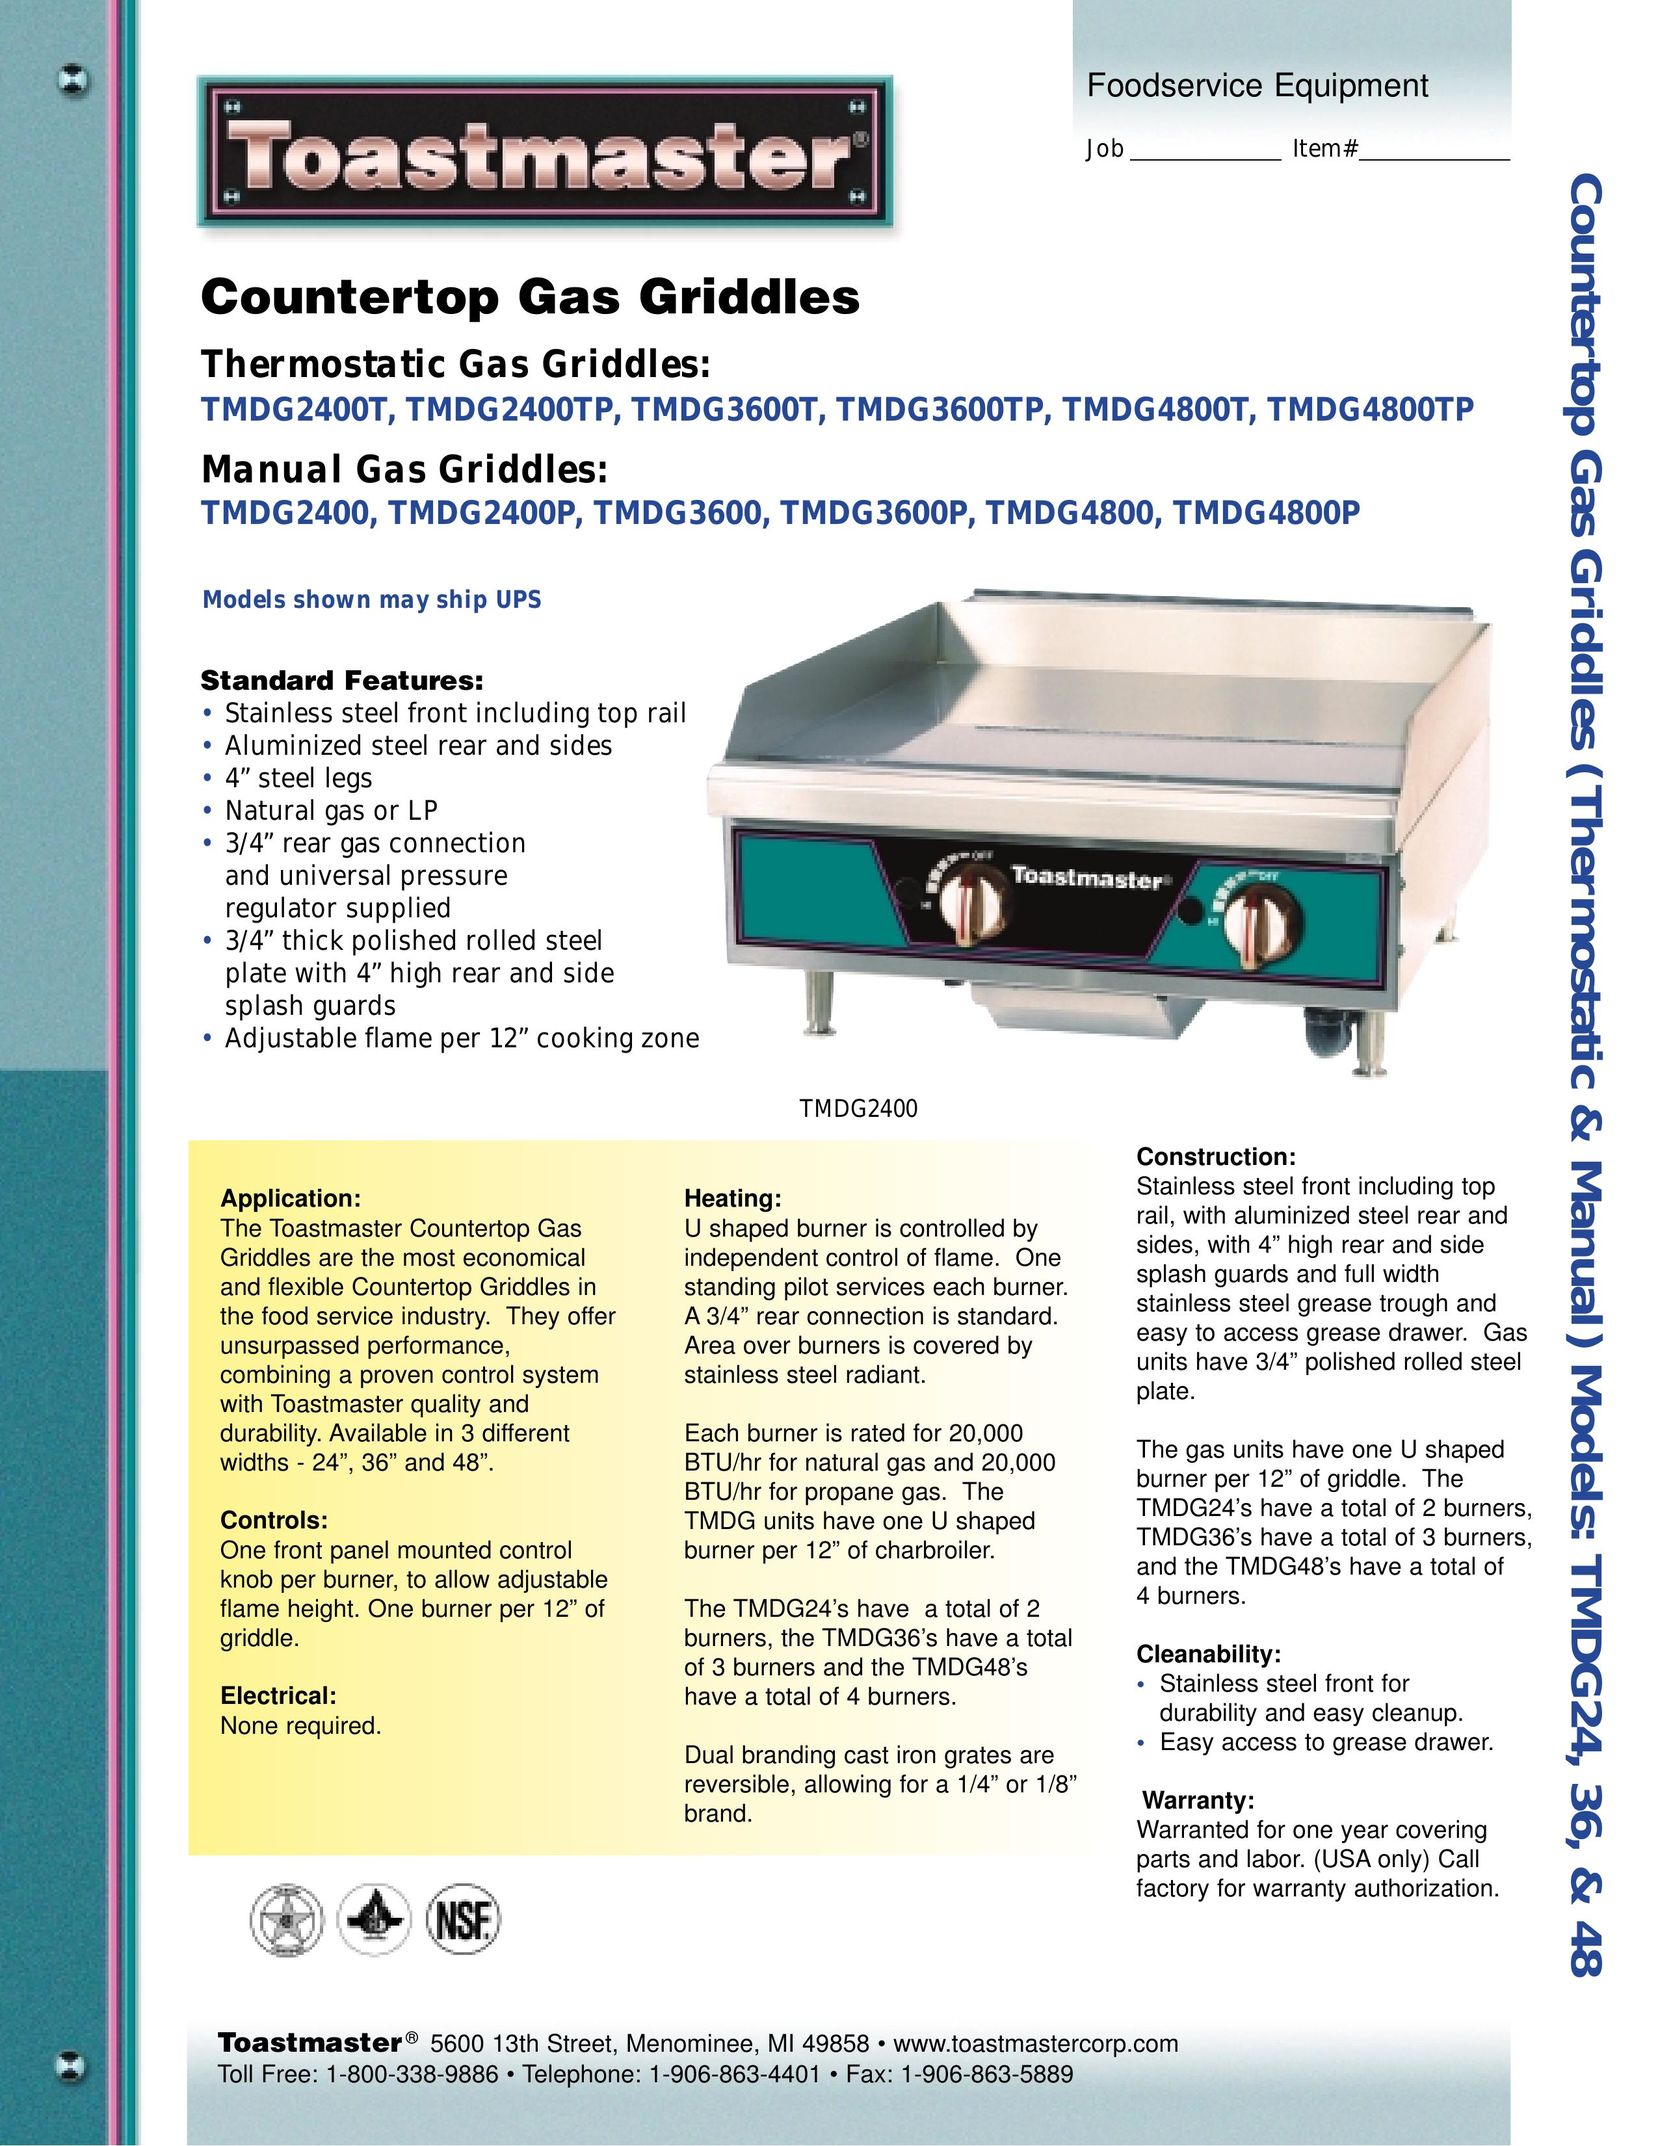 Toastmaster TMDG3600 Griddle User Manual